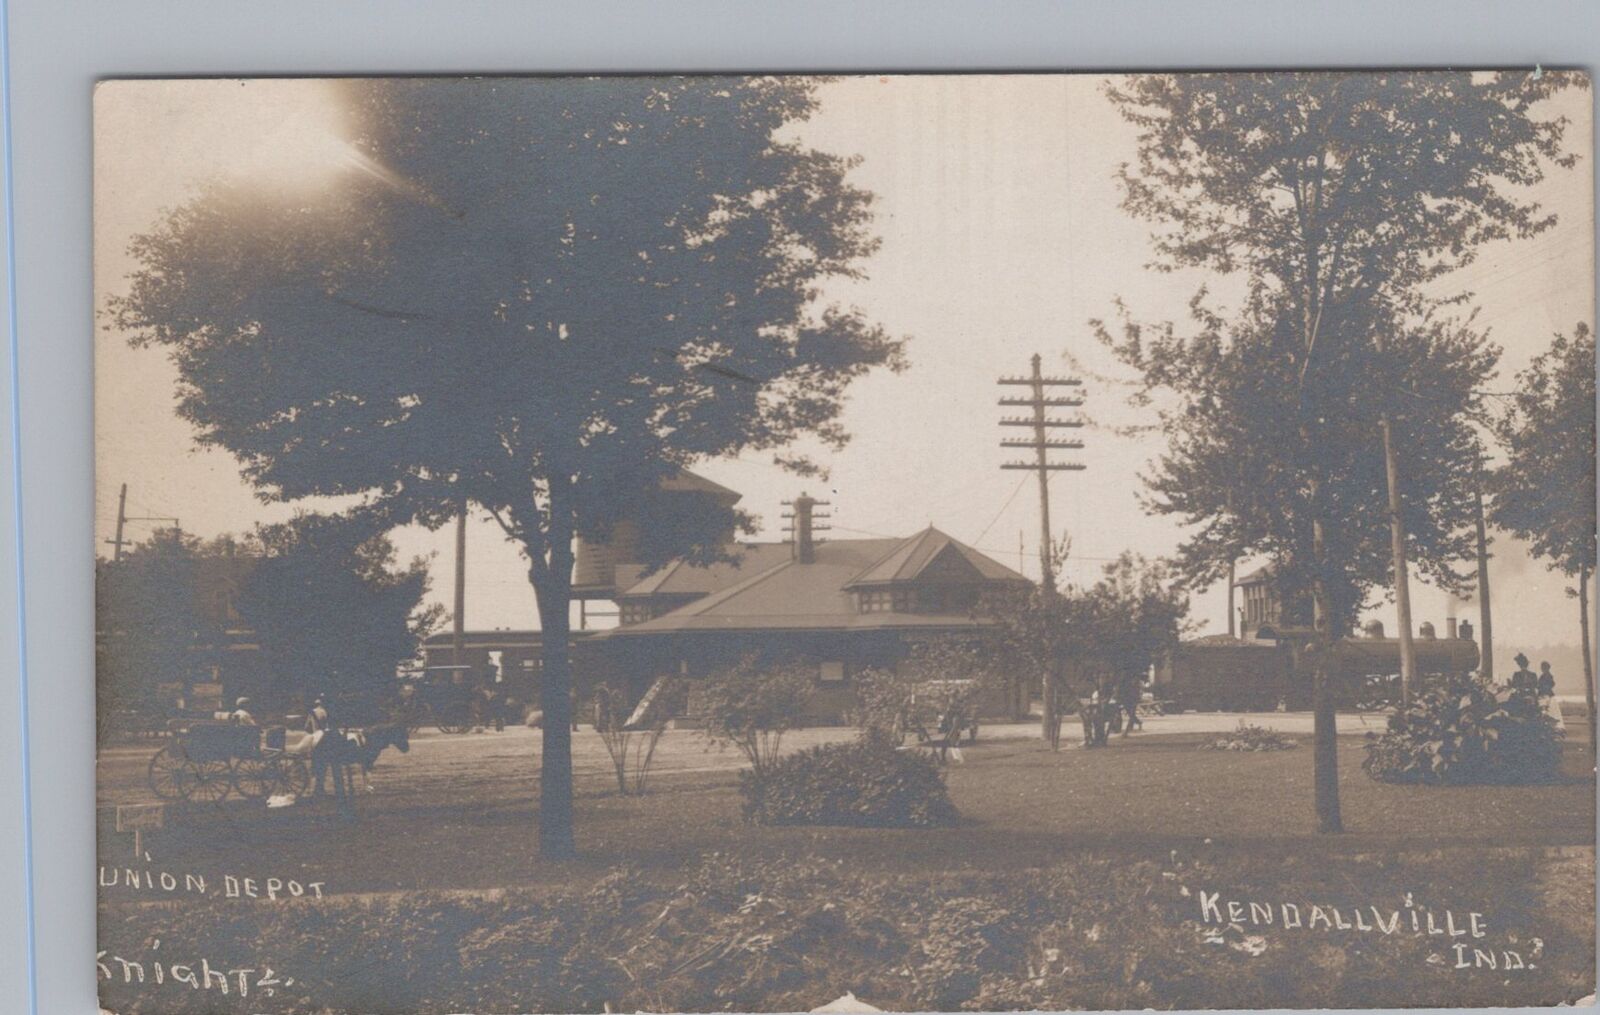 Union Depot Train Station Kendallville Indiana Unposted c1910s RPPC Postcard